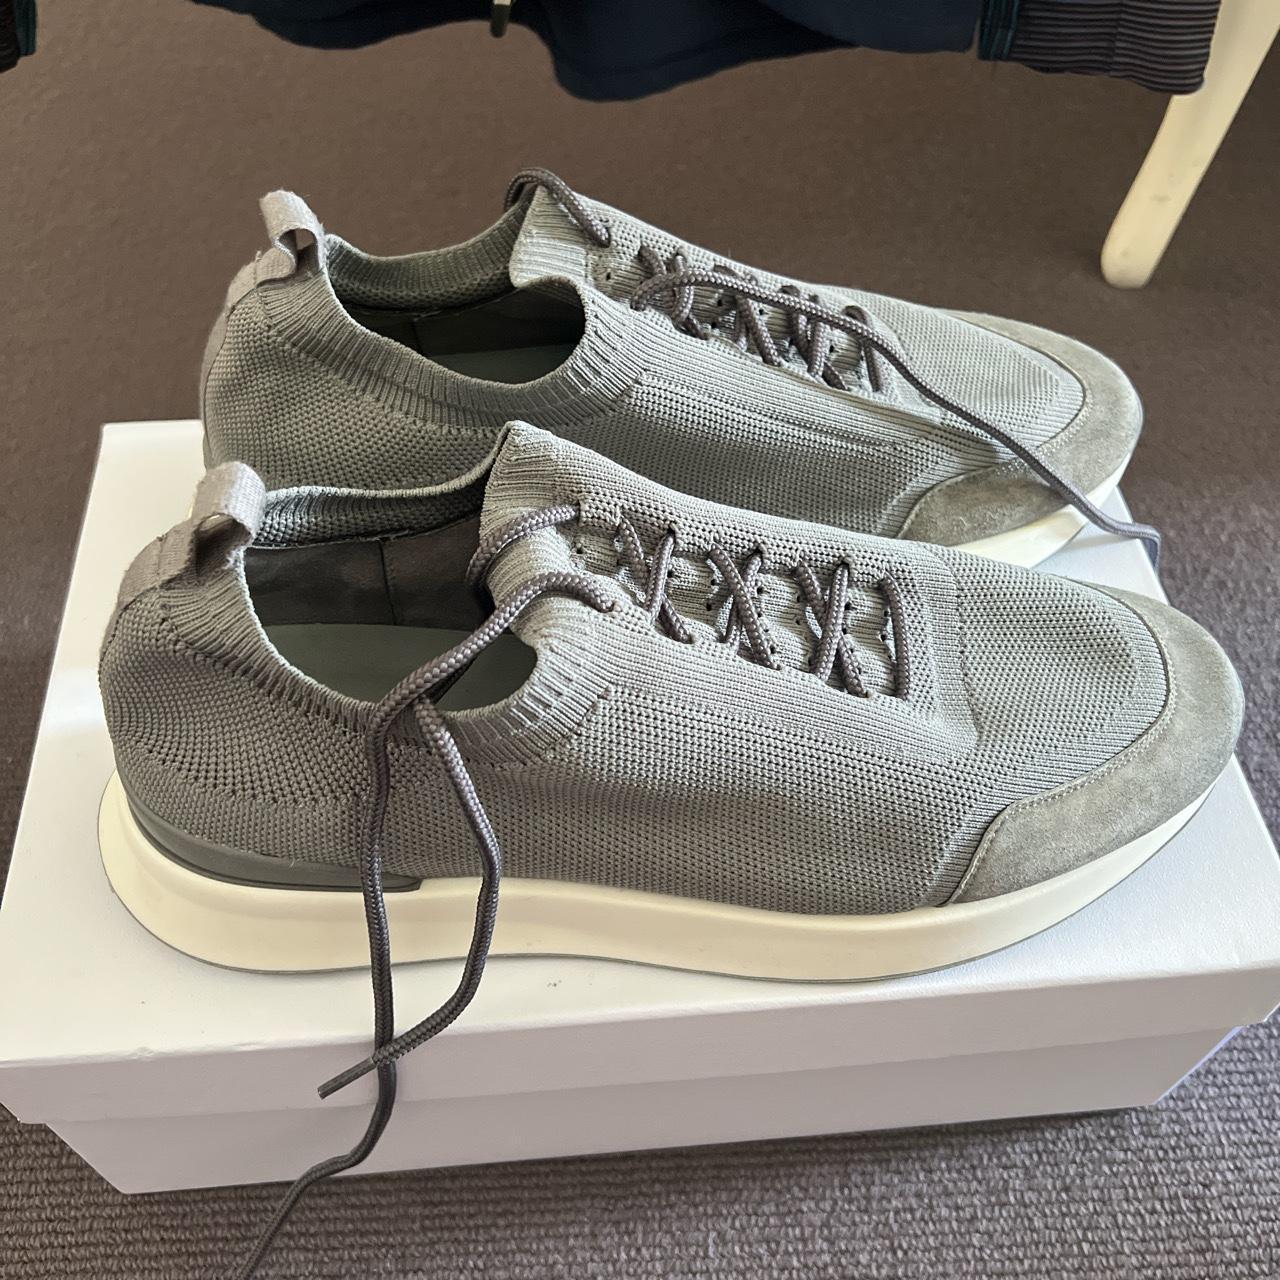 Arne Hybrid Knitted Trainers Stone Grey Colourway... - Depop